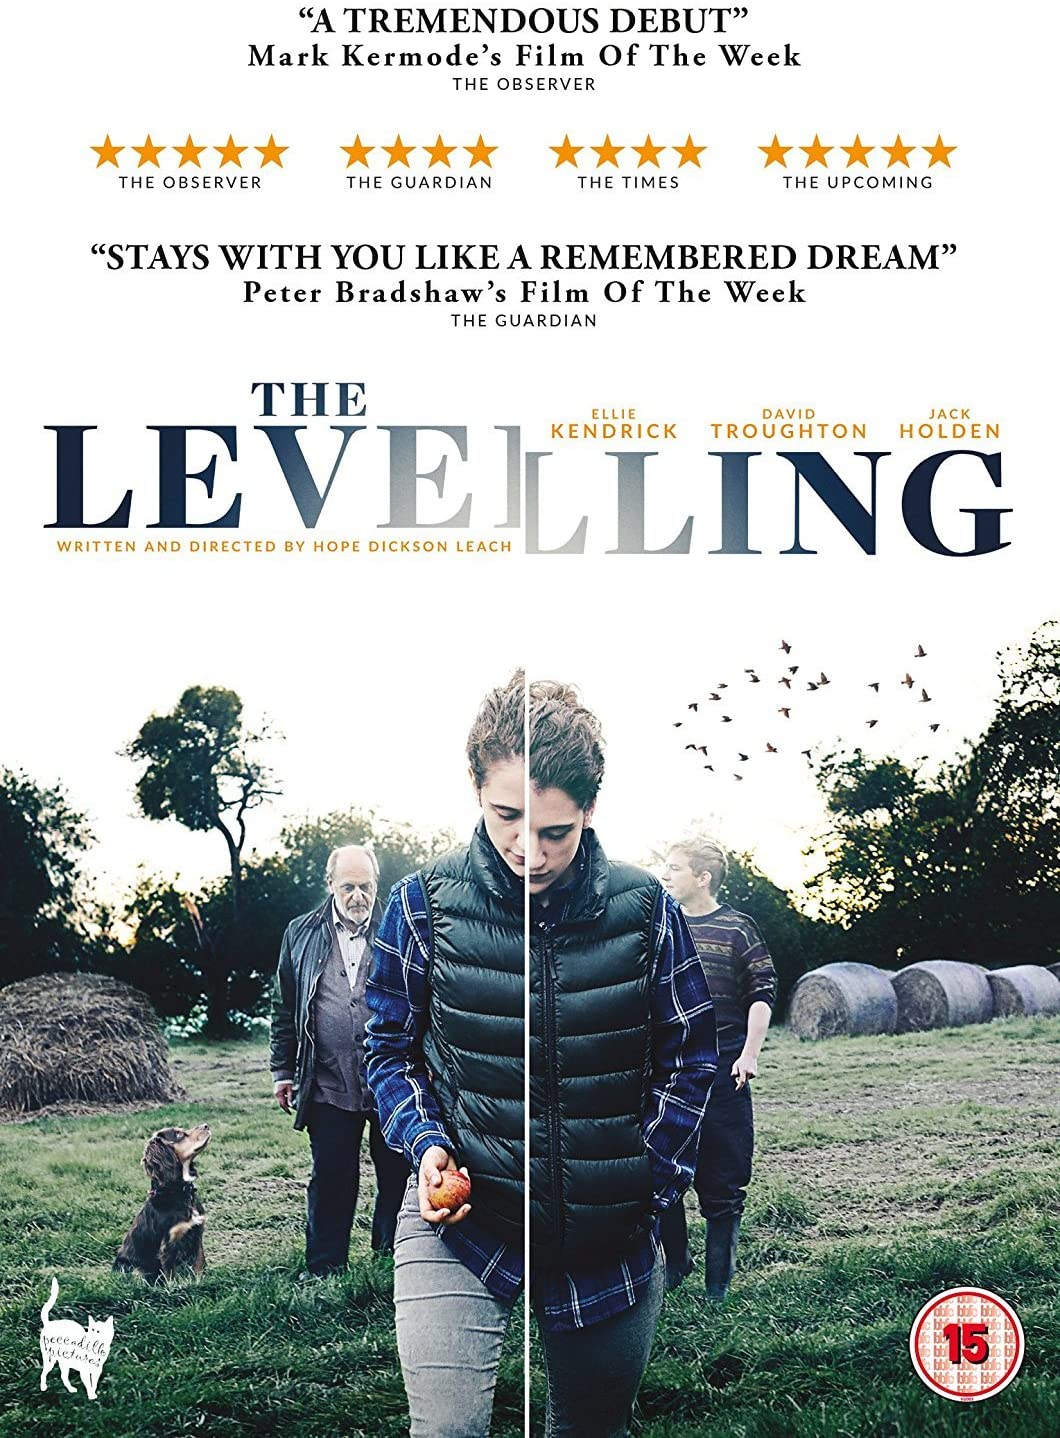 The Leveling – Drama [DVD]